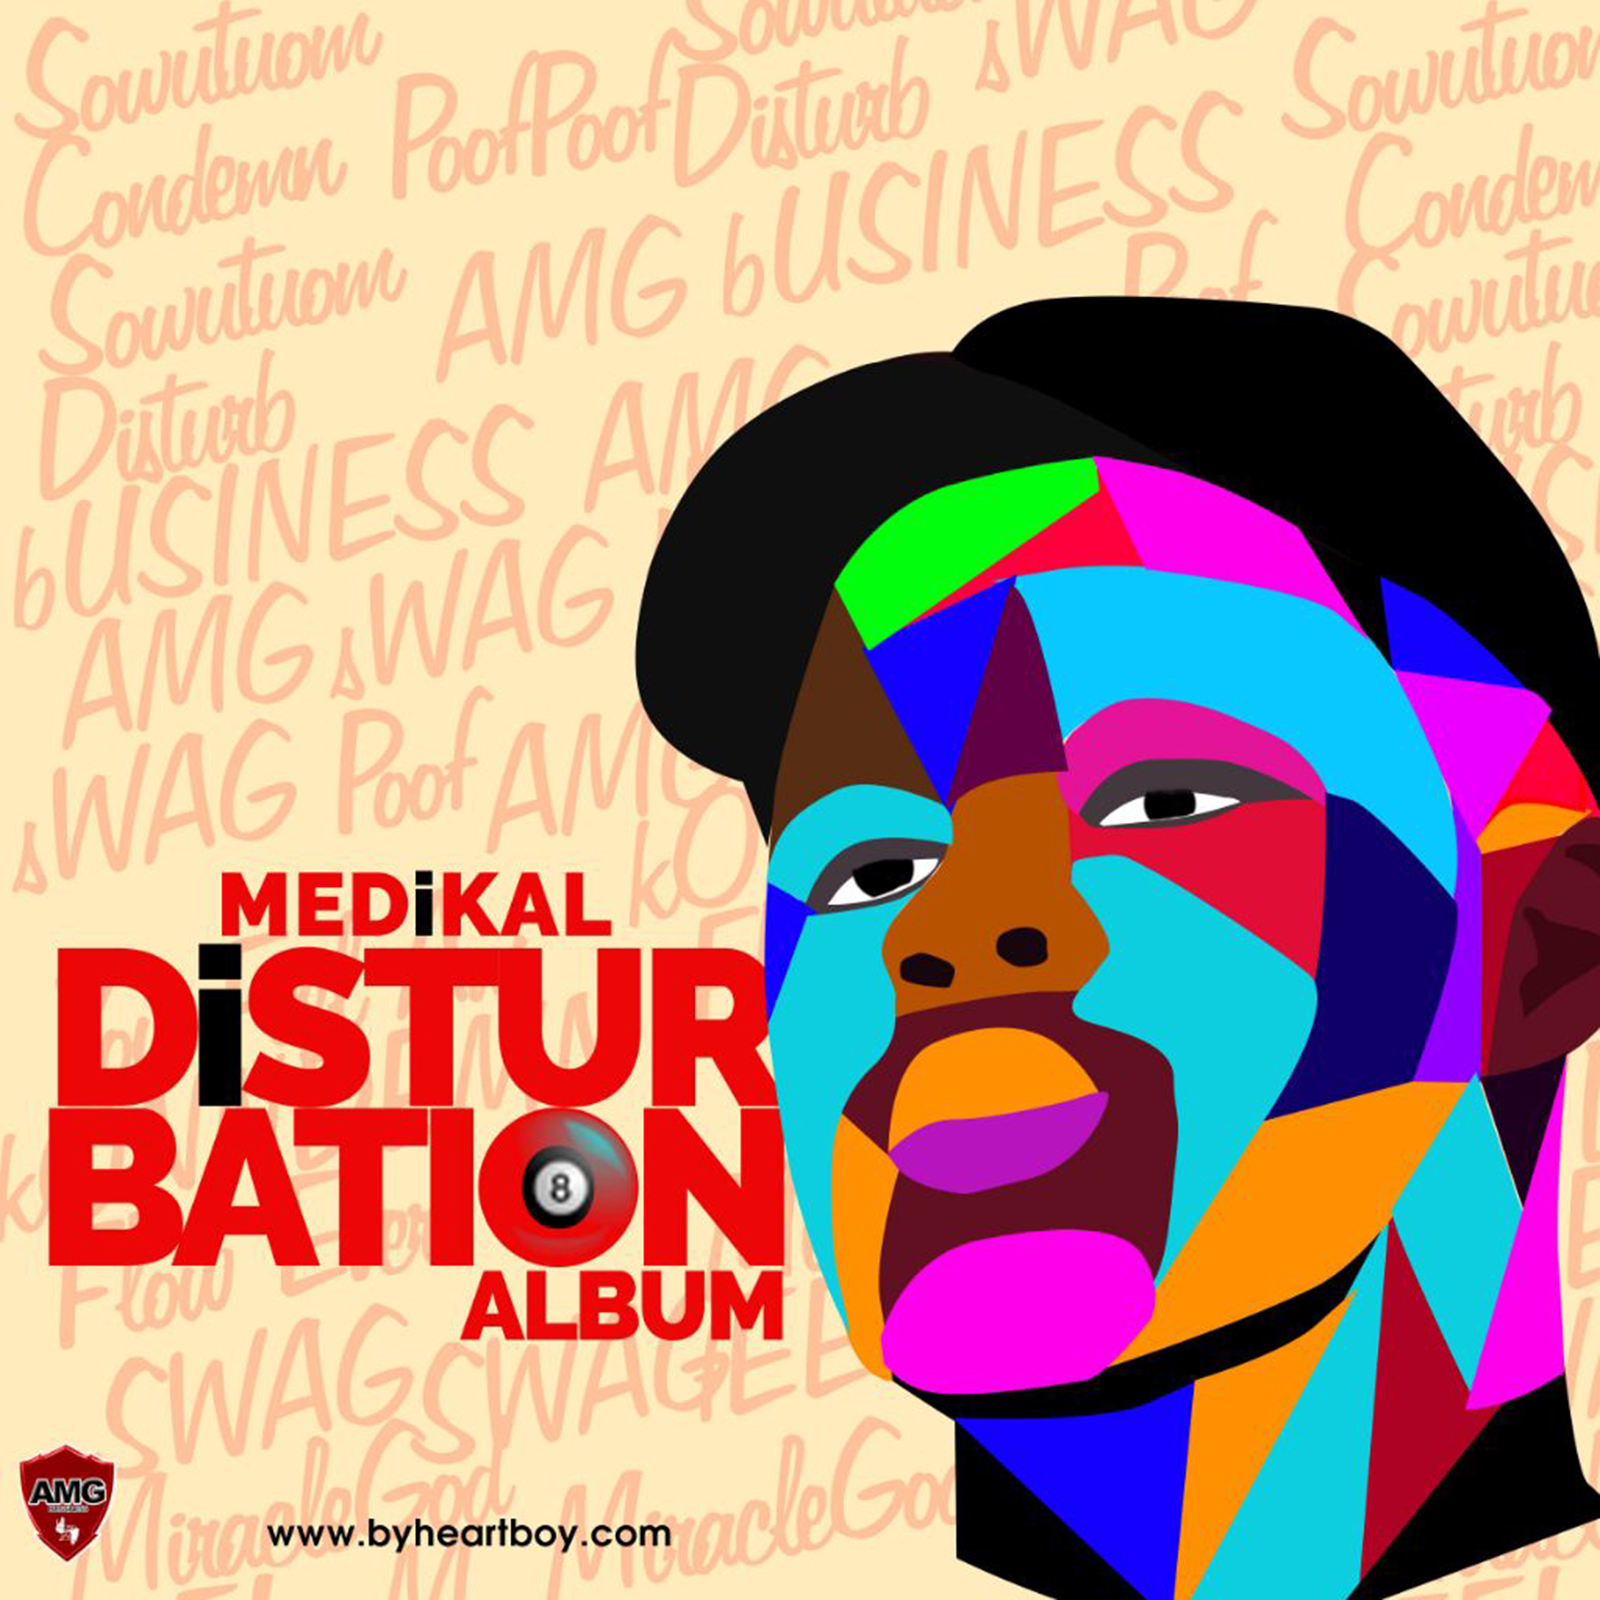 Album Review: 22 songs 1 review; Medikal's Disturbation album